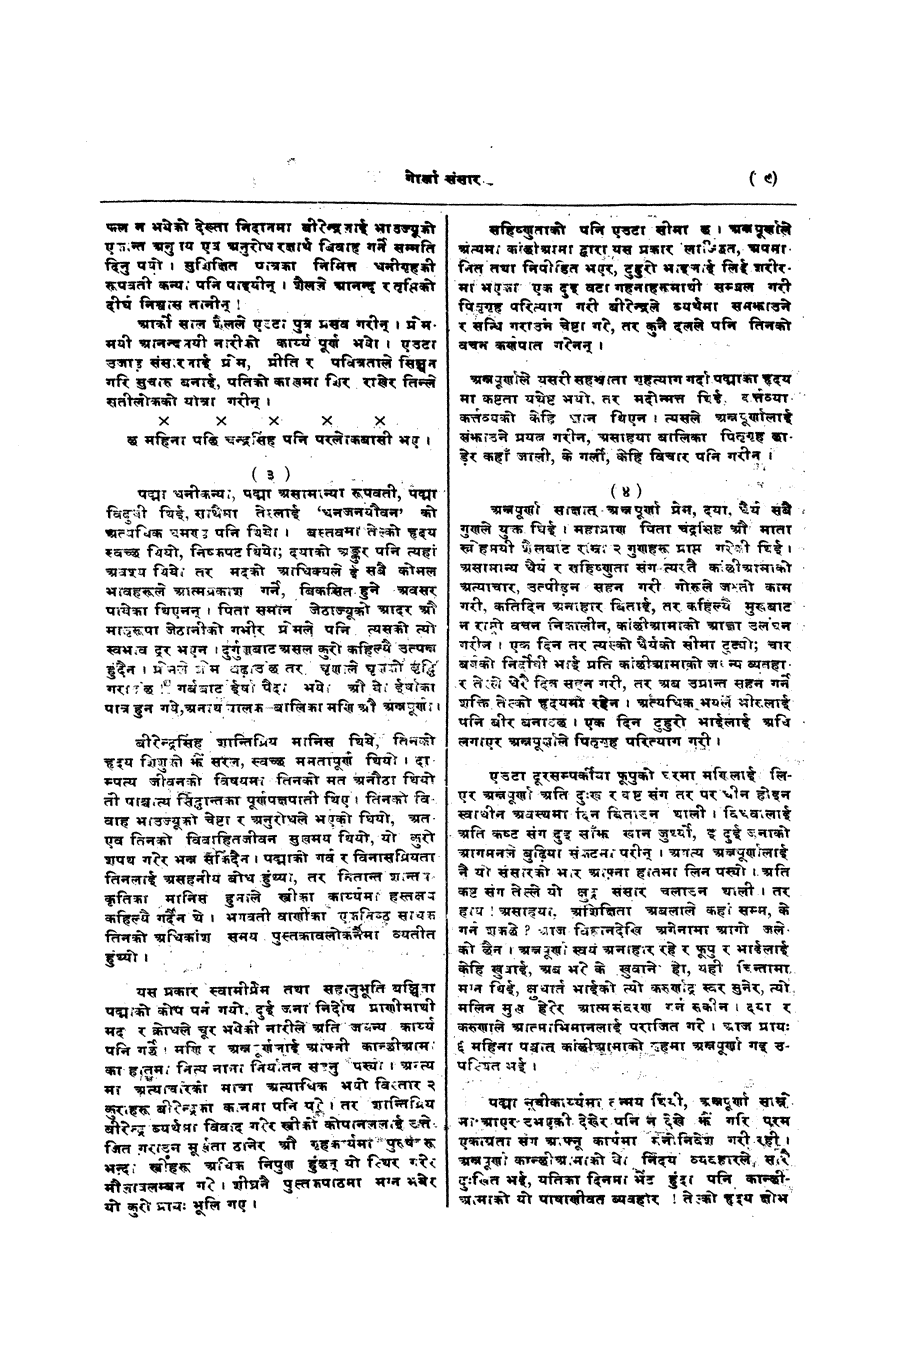 Gorkha Sansar, 1 Mar 1927, page 9